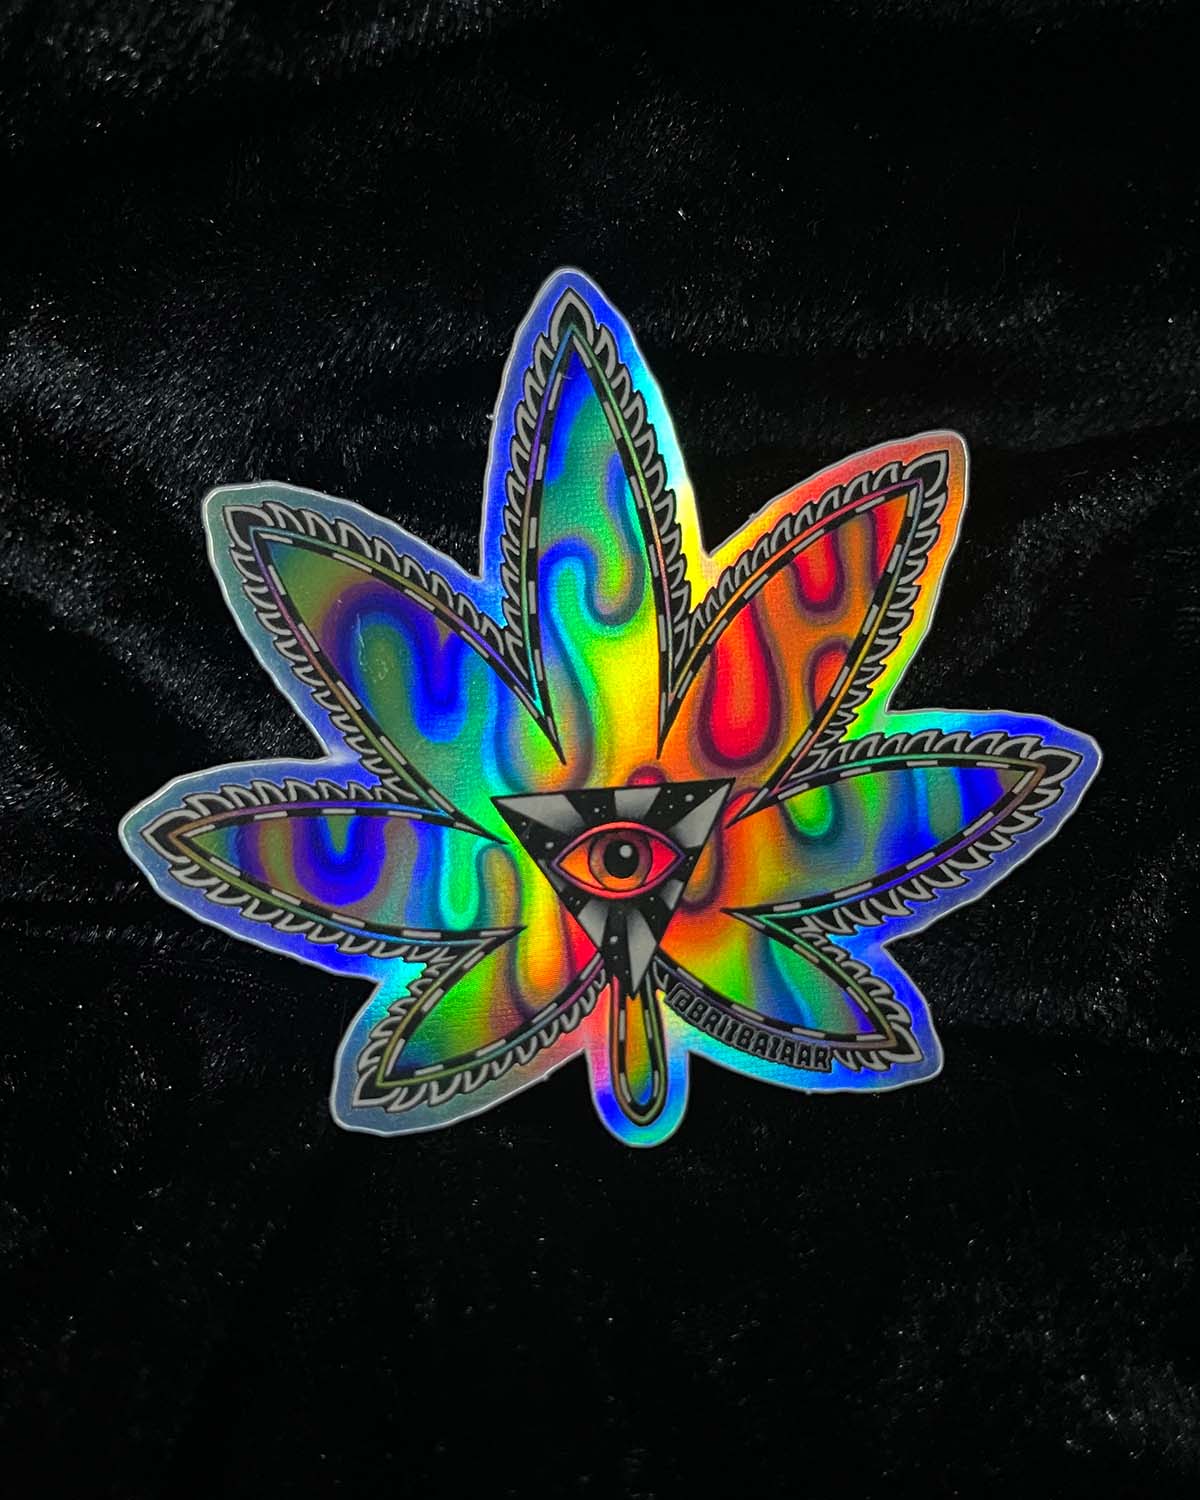 Holographic sticker of Kronic Haze